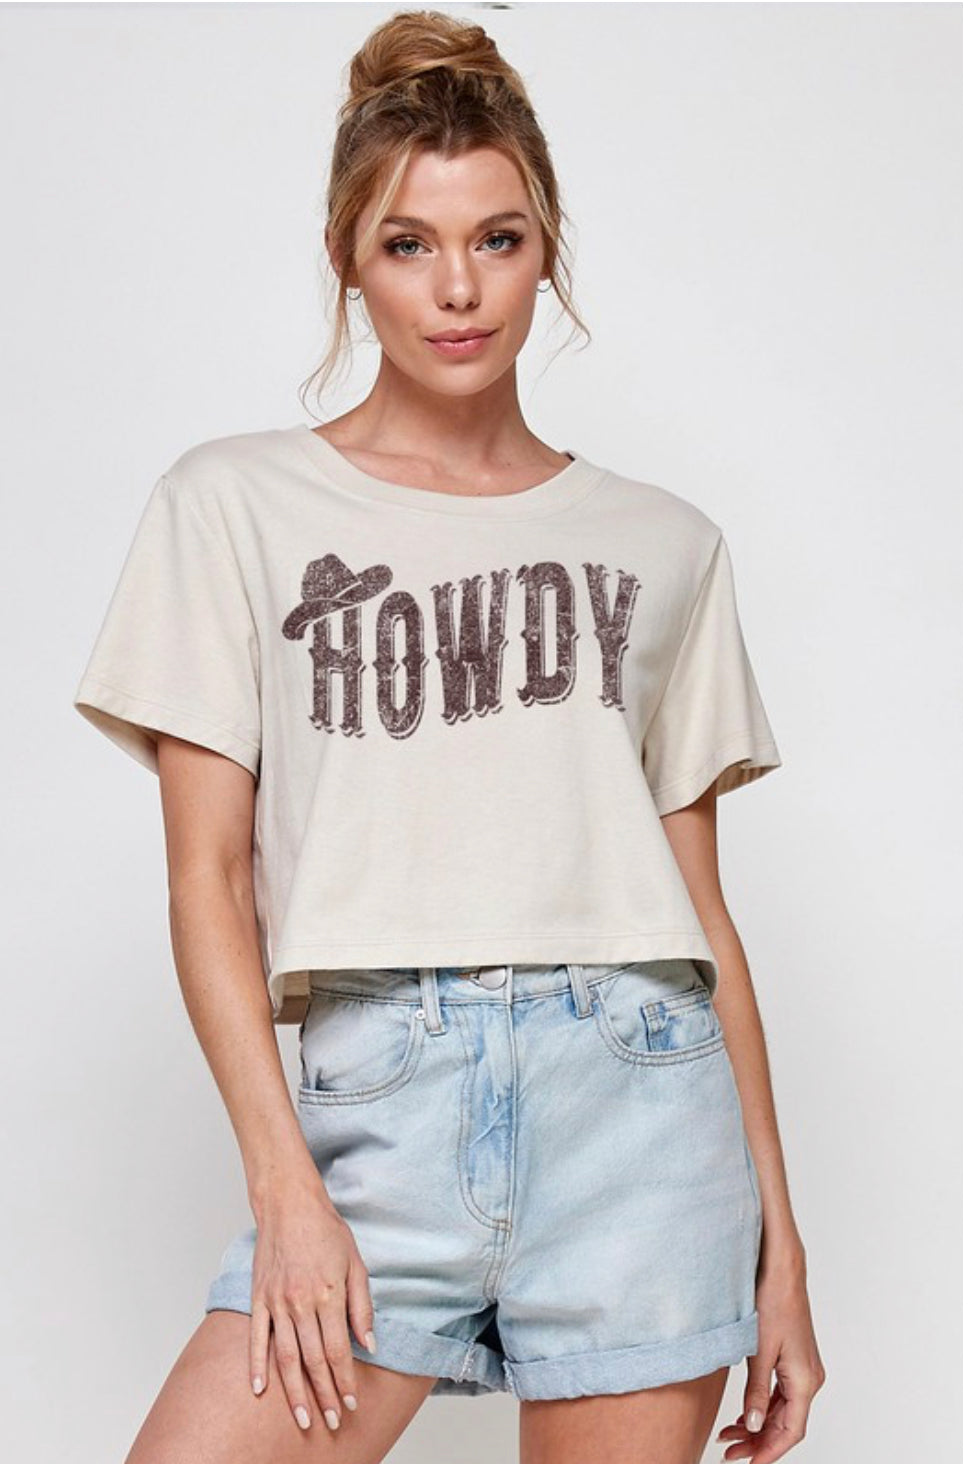 Howdy cropped tshirt